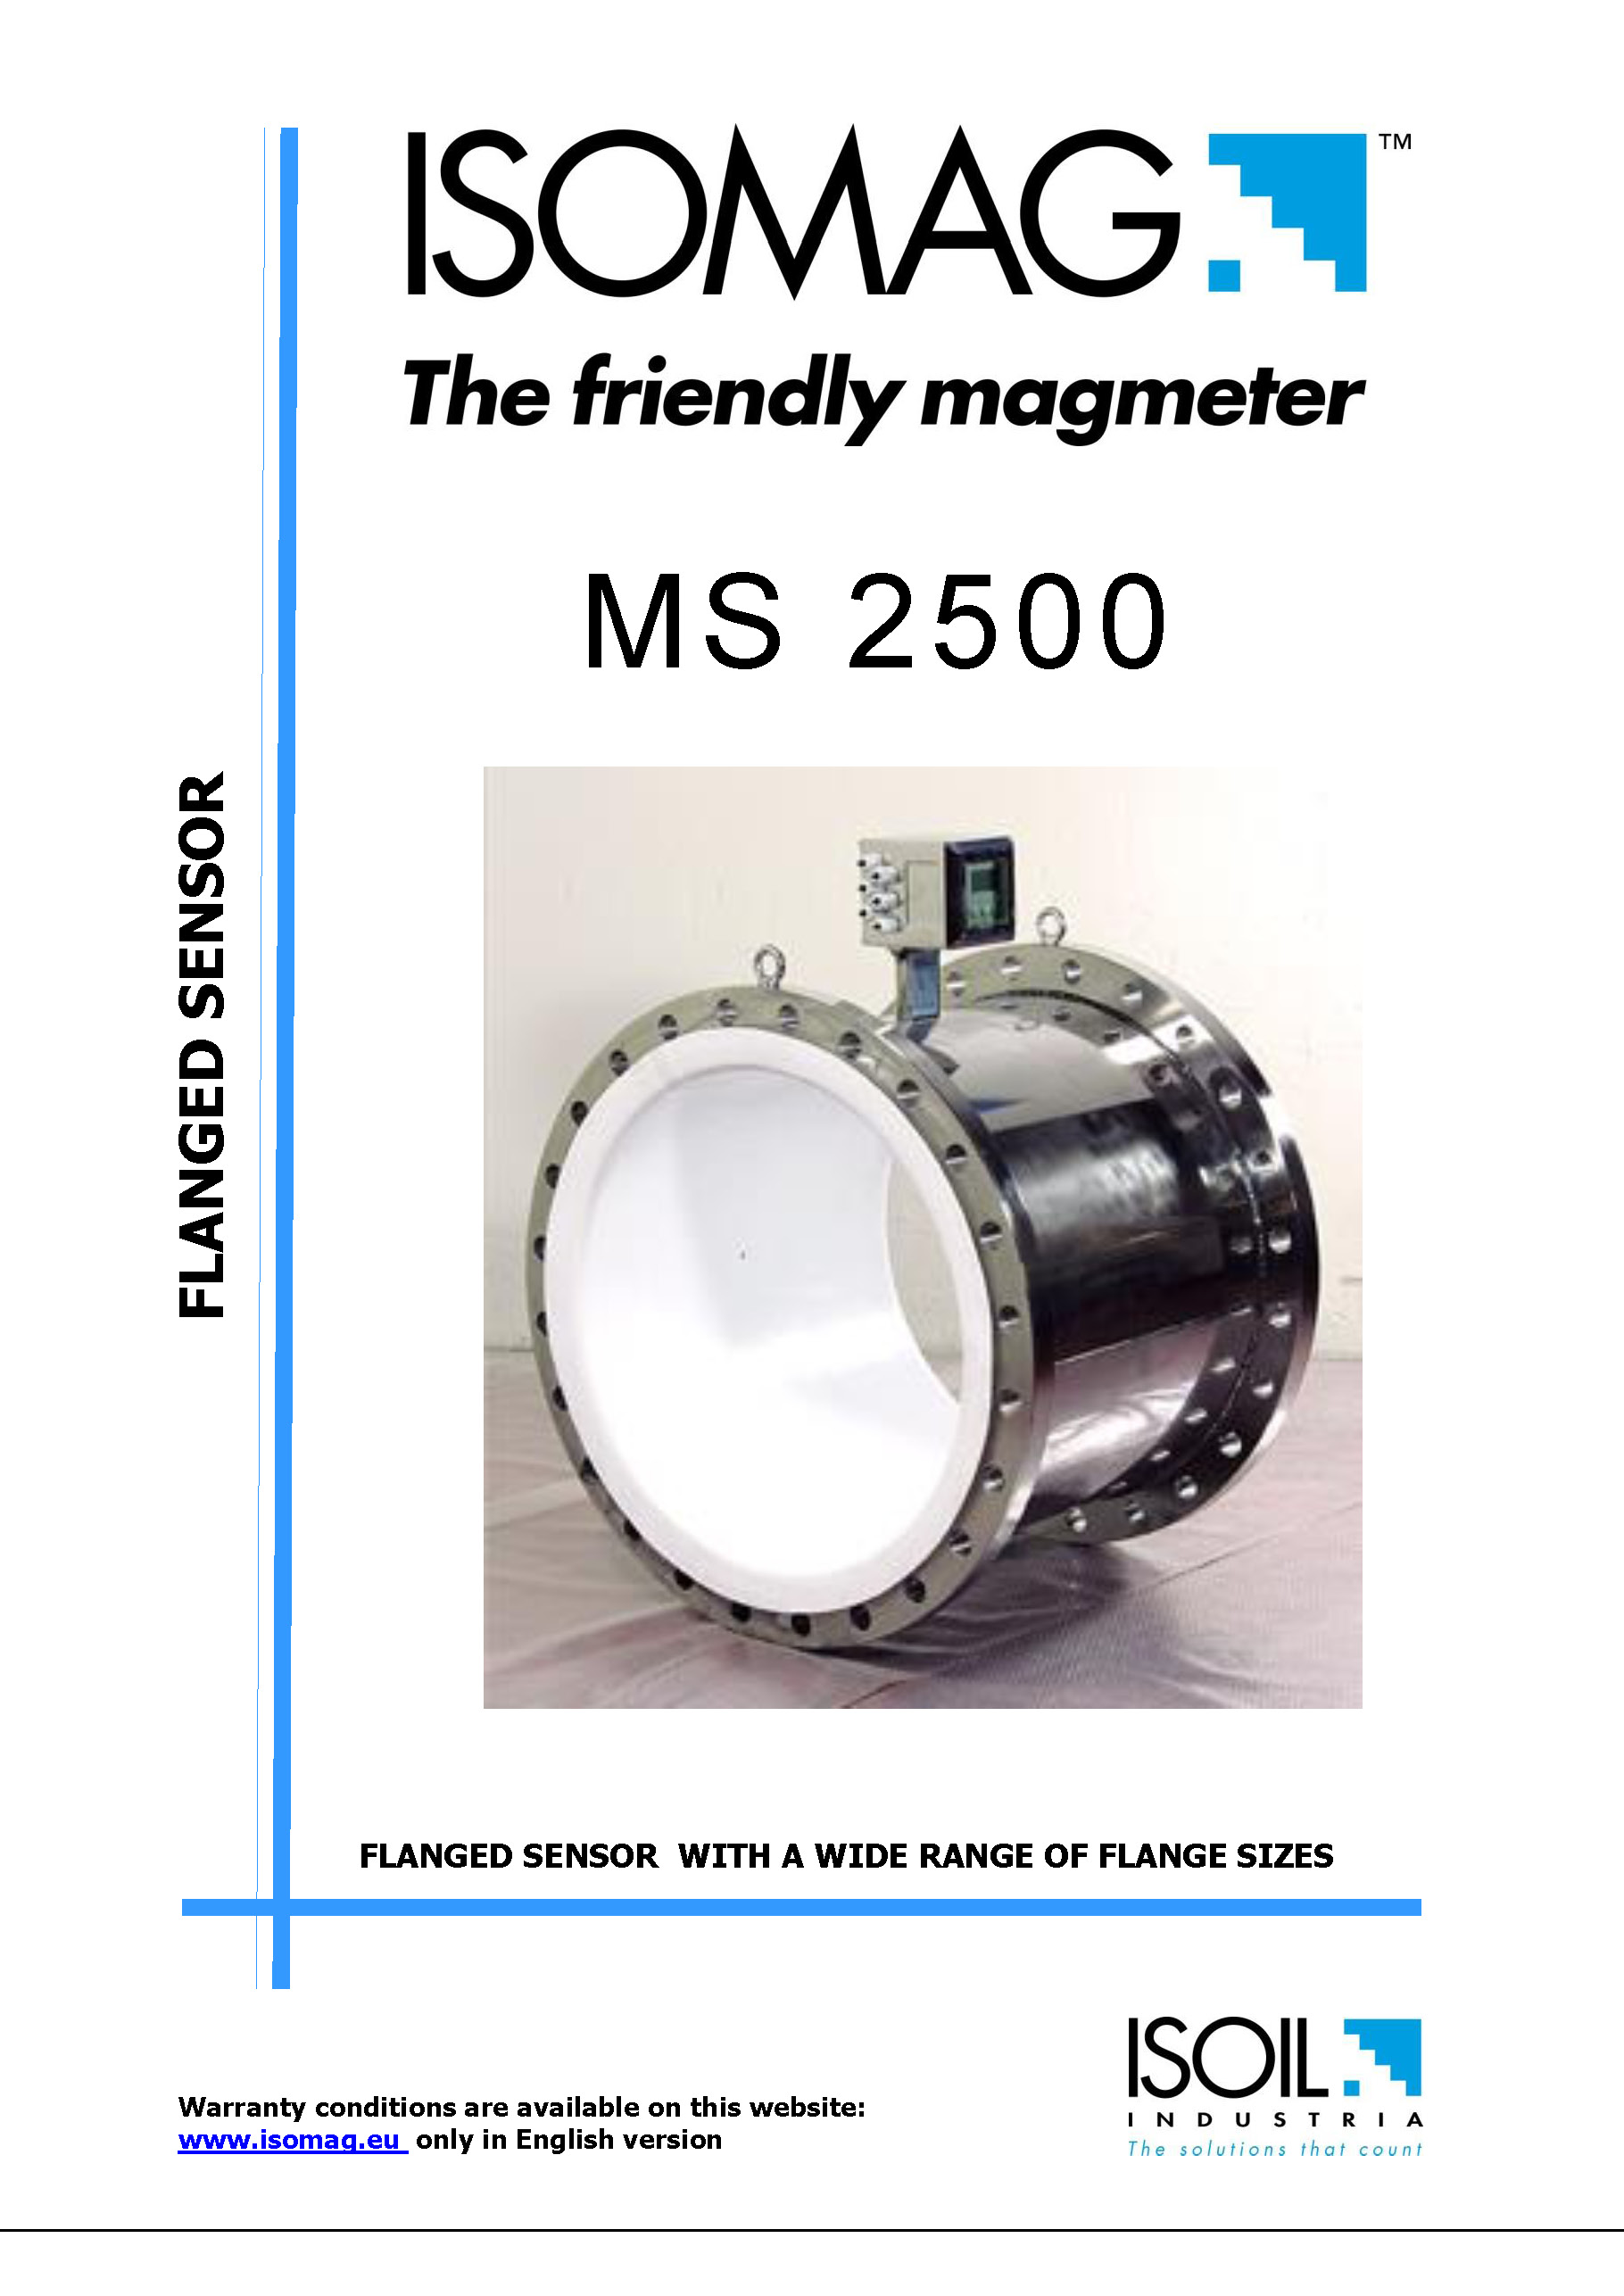 Isomag Magnetisch induktiver Durchflusssensor MS2500 bis 100°C